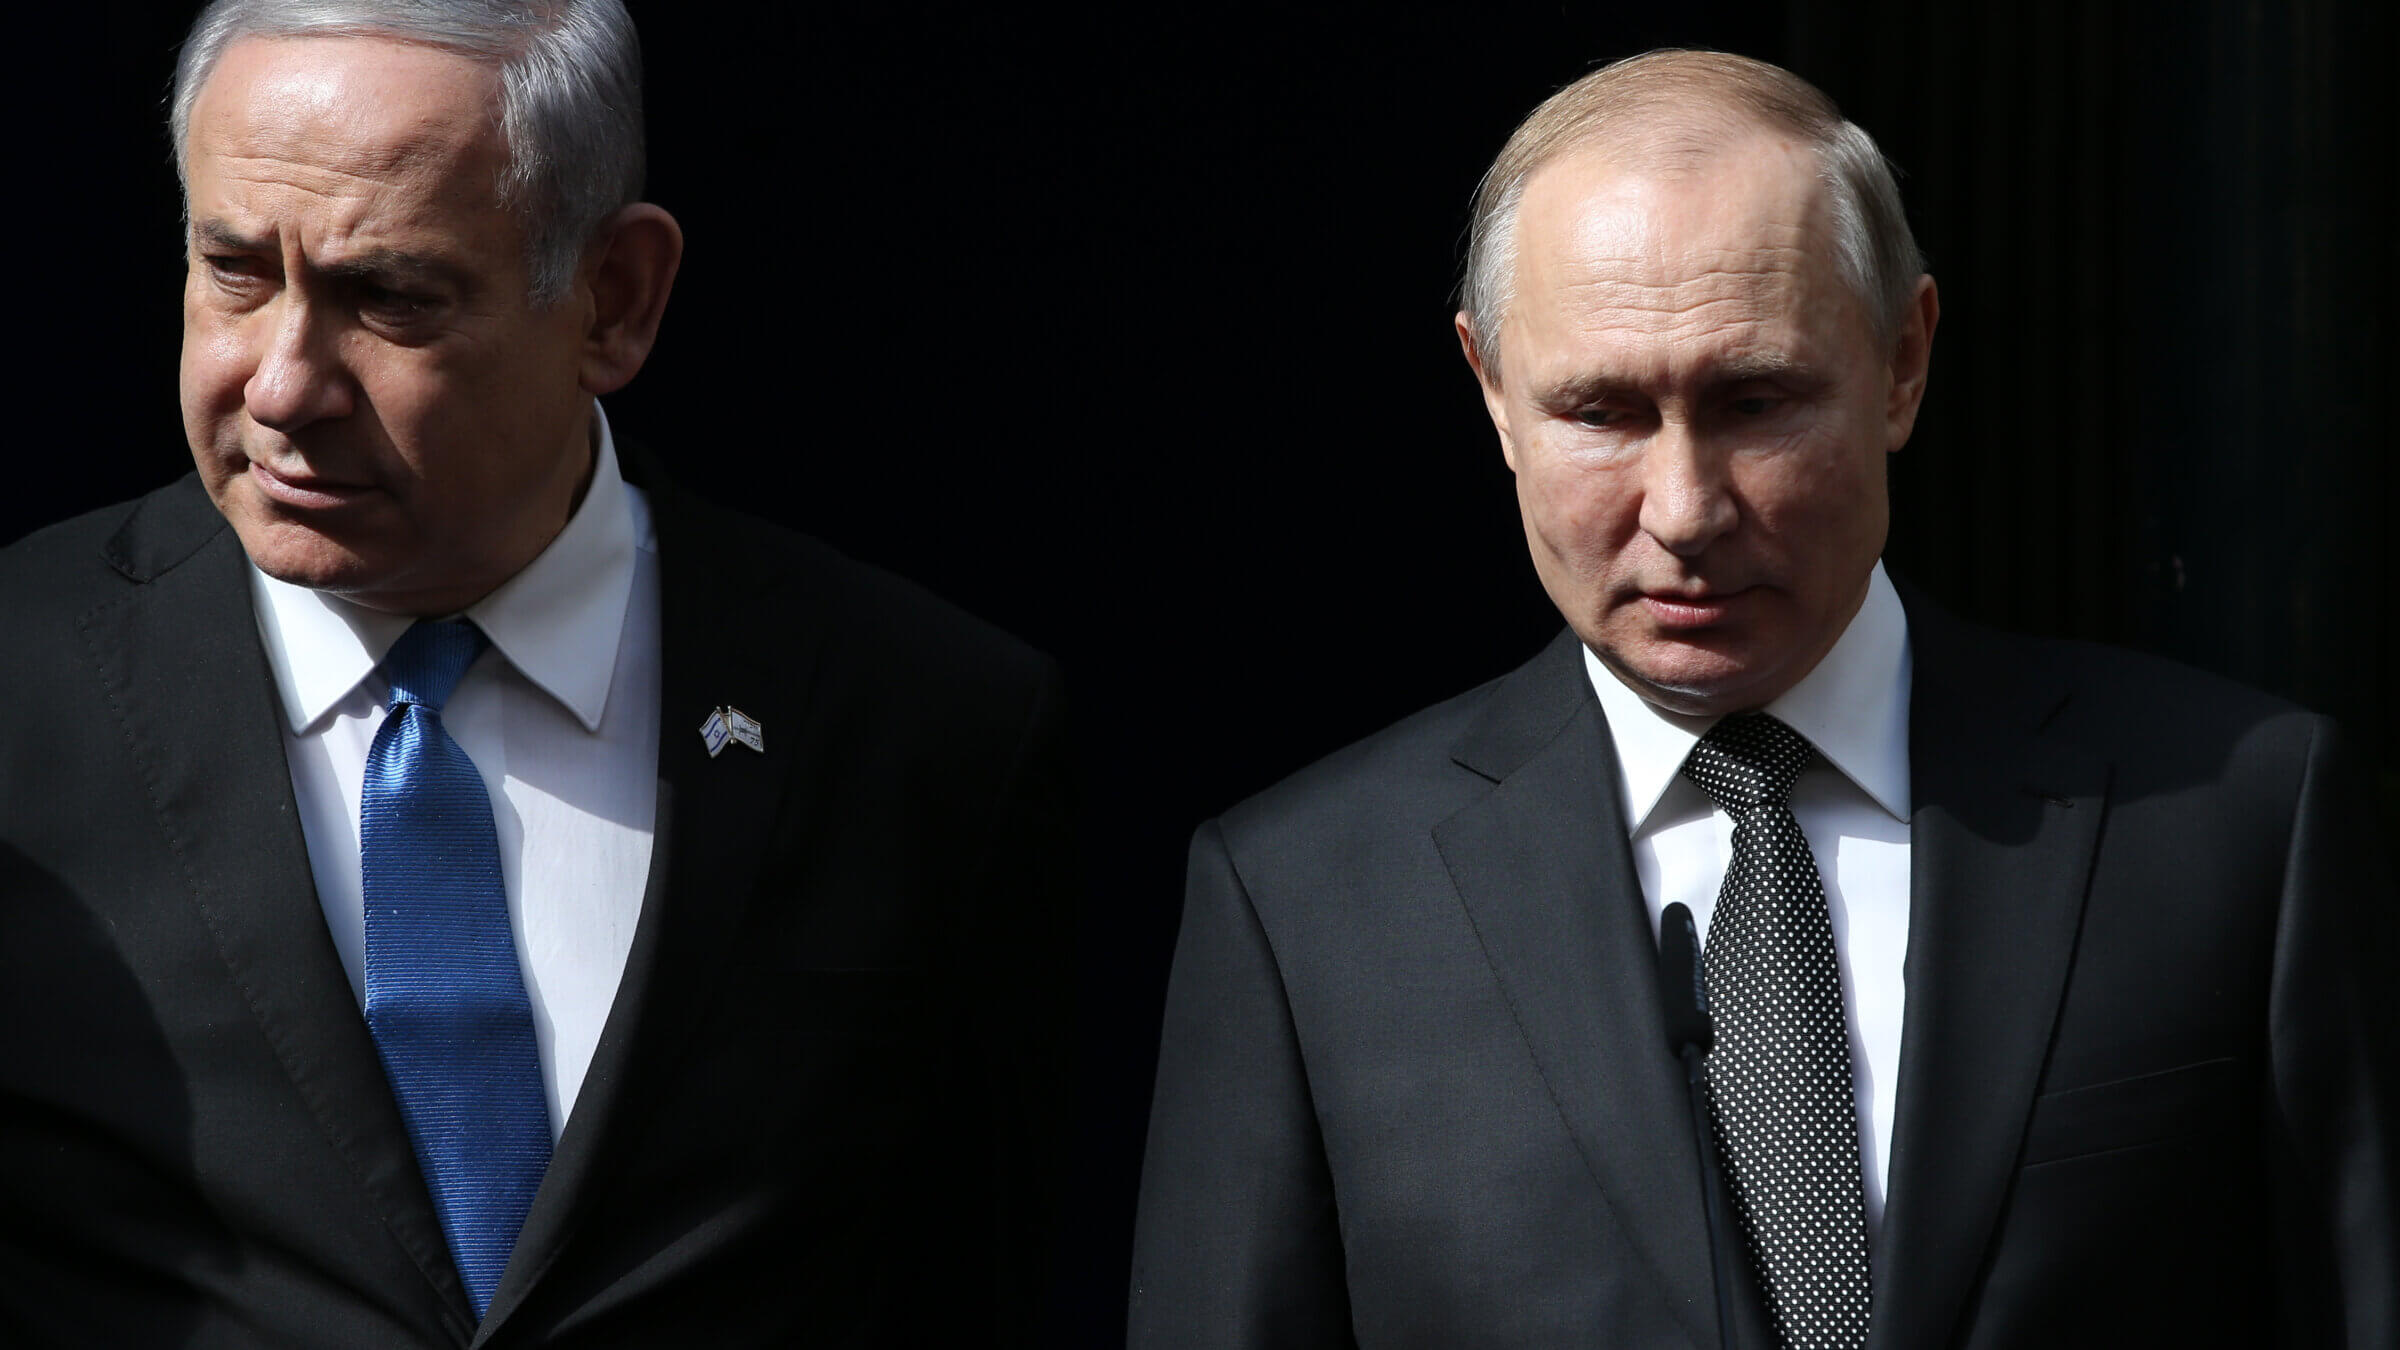 Russian President Vladimir Putin and Israeli Prime Minister Benjamin Netanyahu (L) attend their meeting at Prime Minister's Office on January 23, 2020 in Jerusalem, Israel